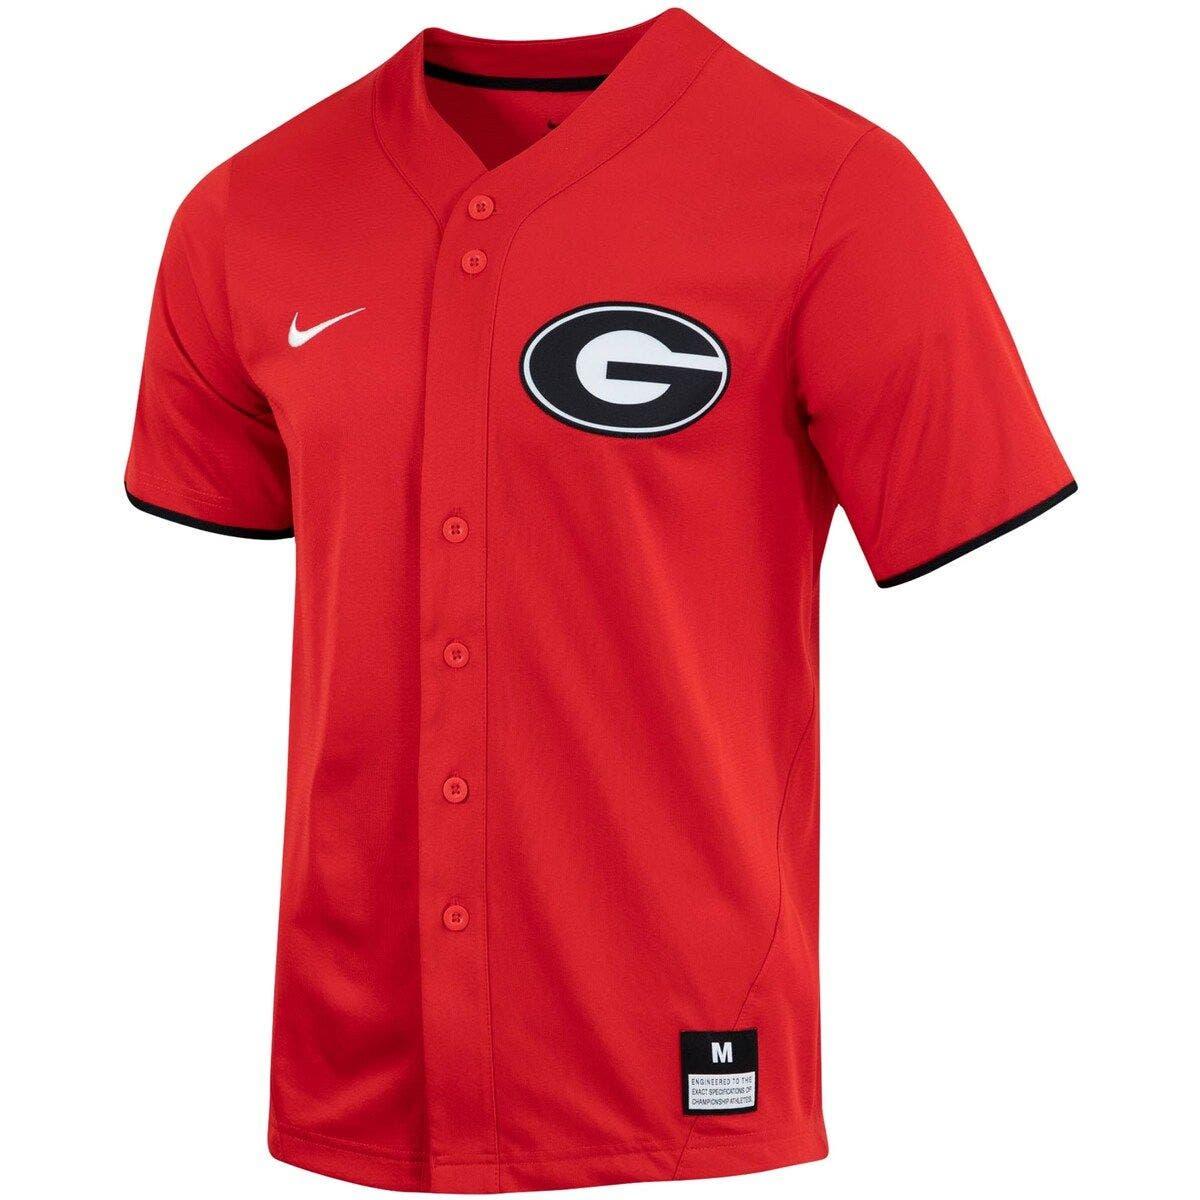 Nike Men's Full Replica Baseball Jersey in Red - Ole Miss